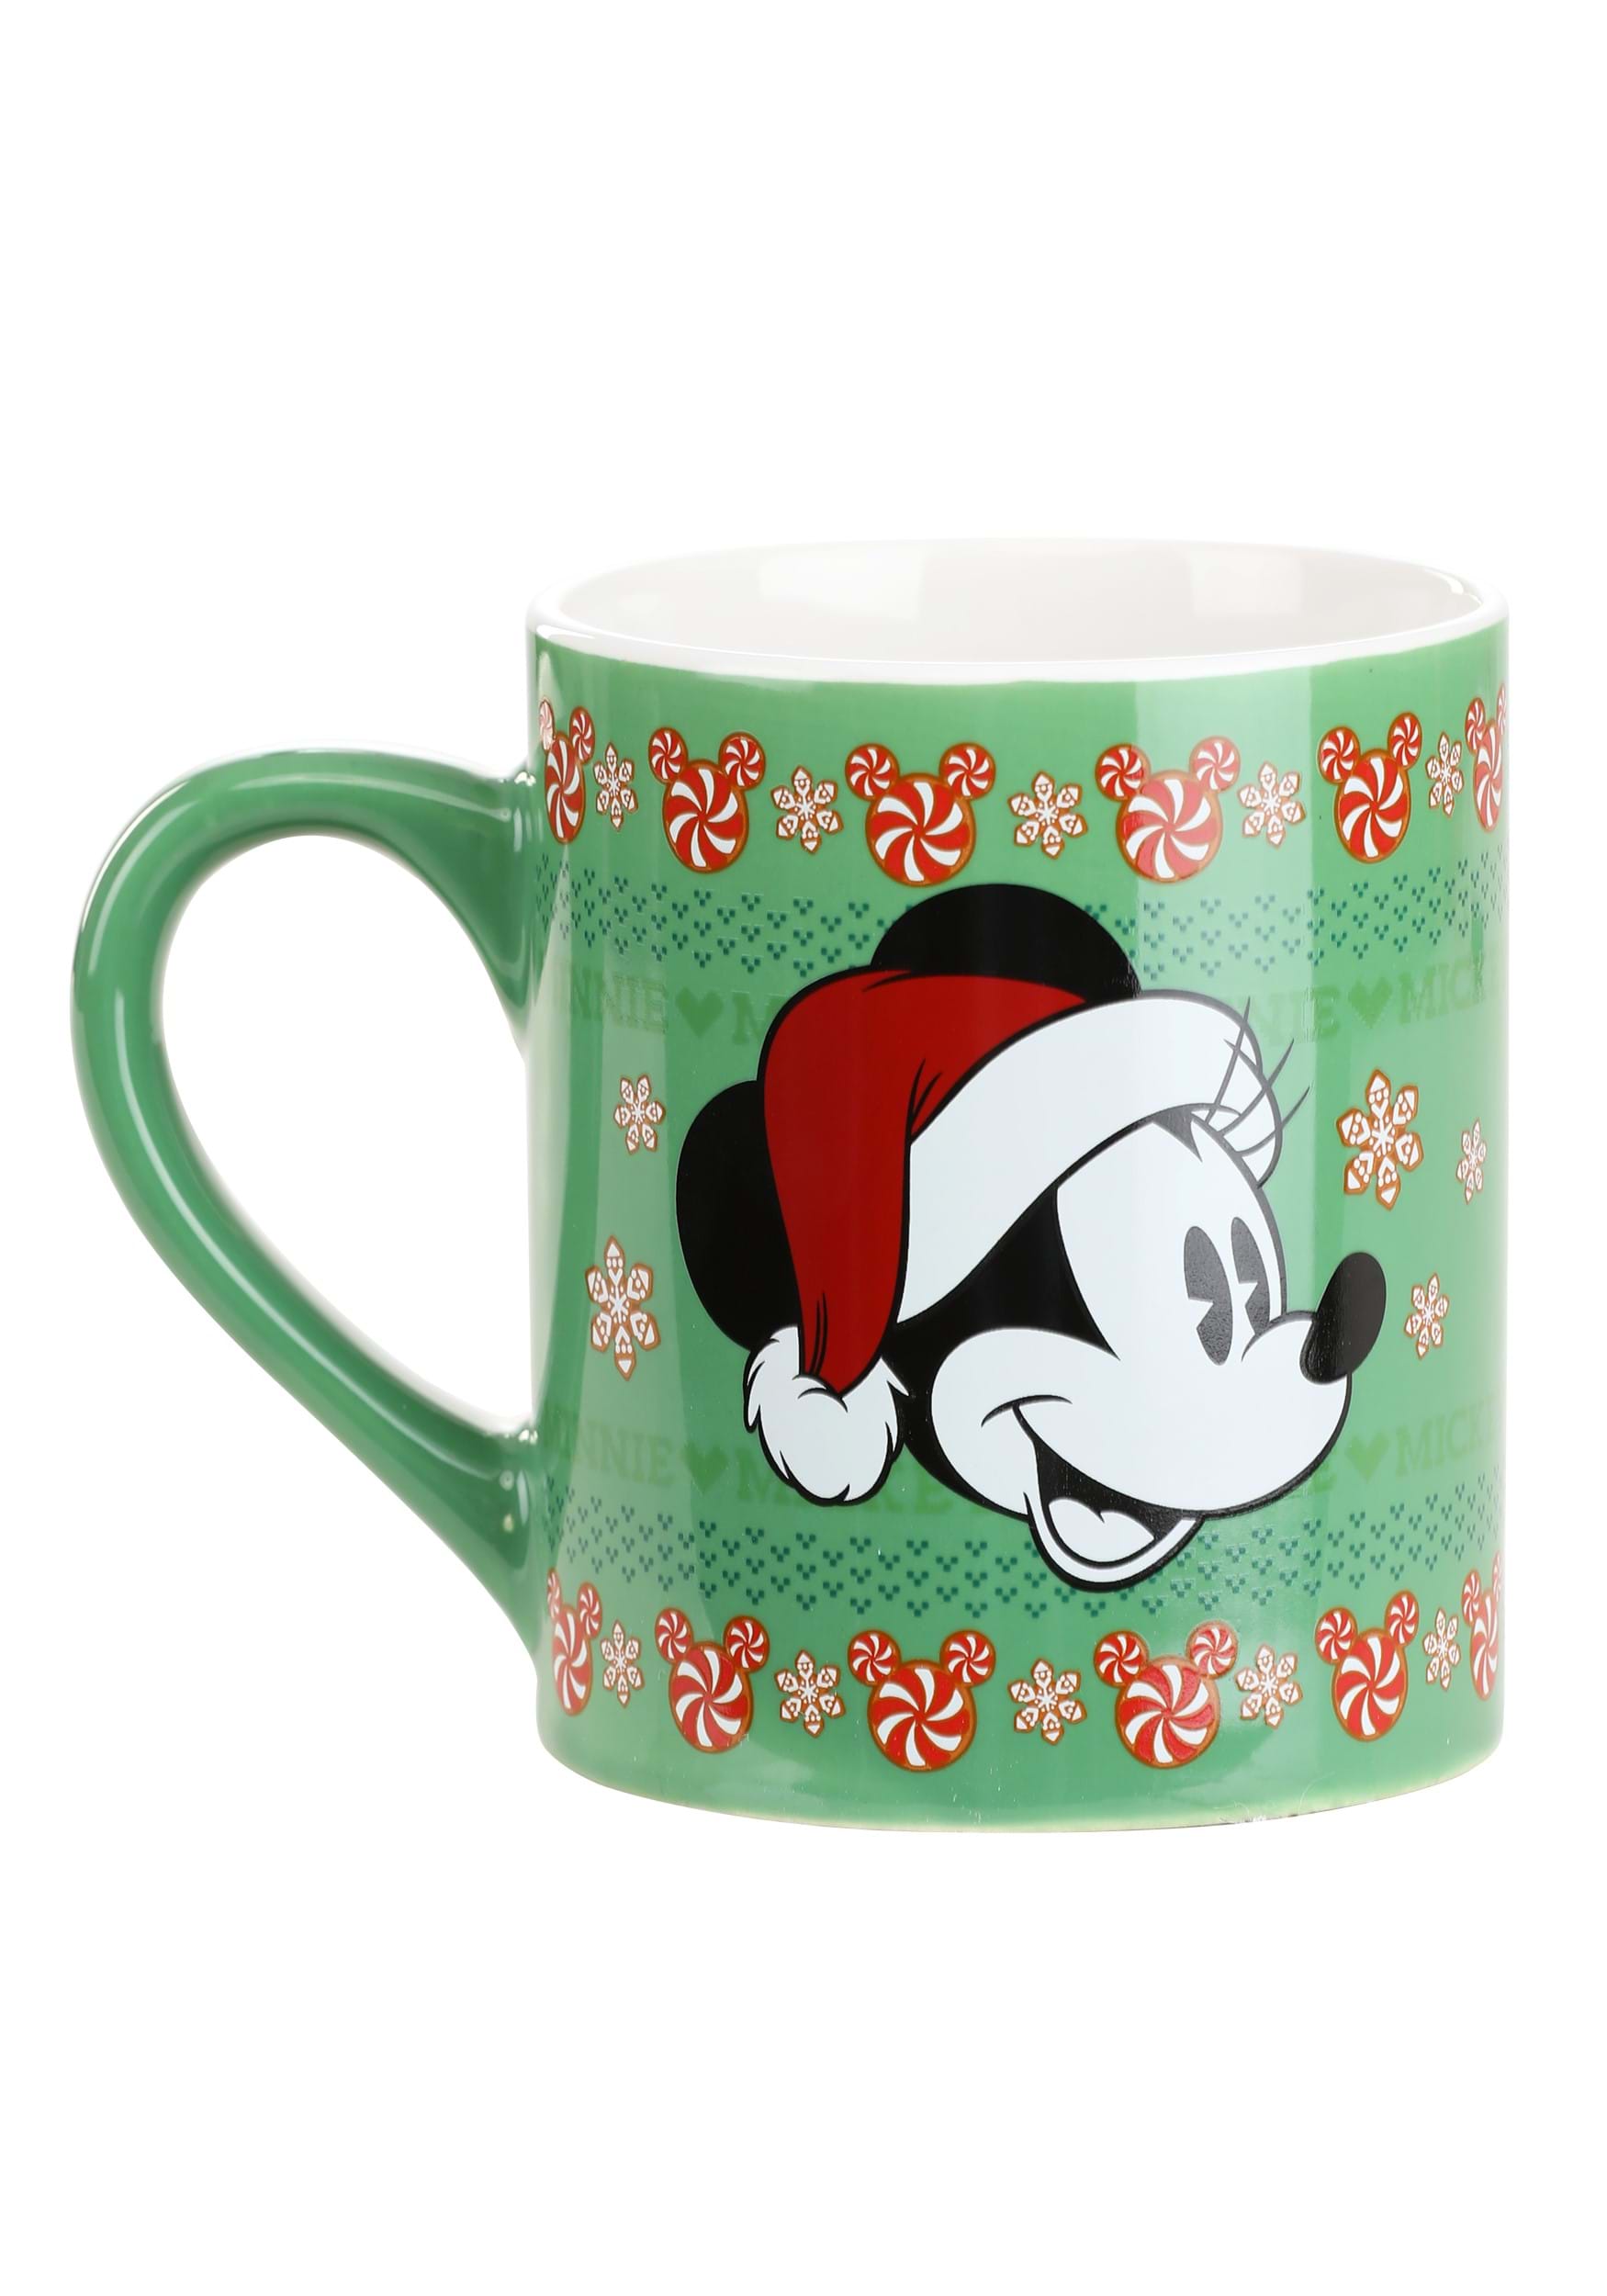 https://images.fun.com/products/80020/2-1-211091/disney-christmas-14oz-ceramic-mug-2-pack-alt-1.jpg